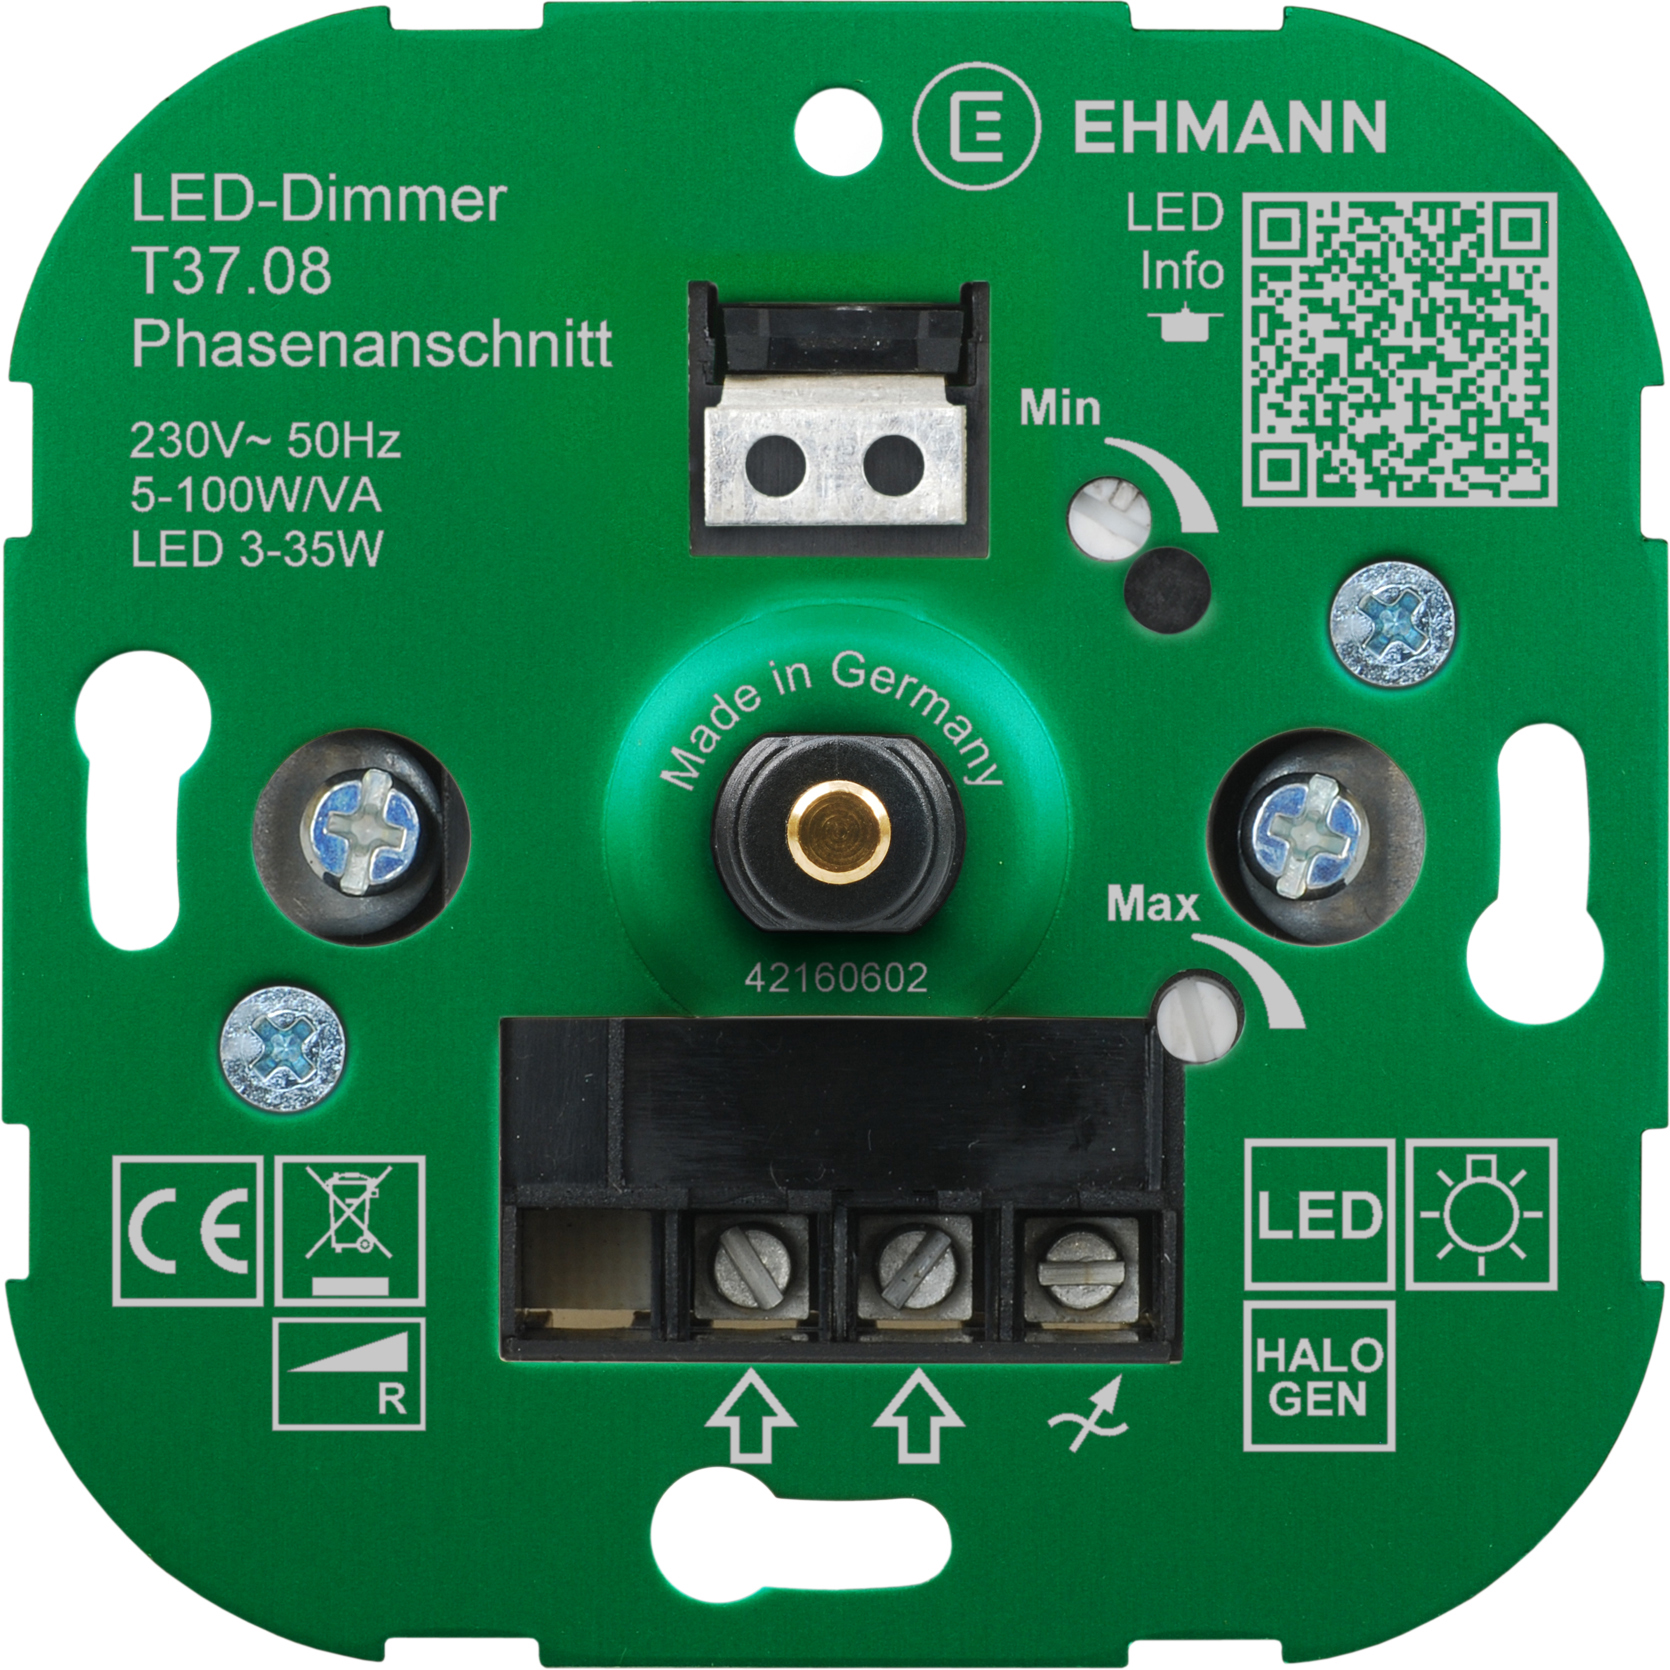 Ehmann 3700x0800 Elektronischer LED Unterputz-Dimmer, Phasenanschnitt, 230 V, 50 Hz, Leistung: LED 3-35 W, 5-100 W/VA, inkl. Schalterprogramm-Adapter